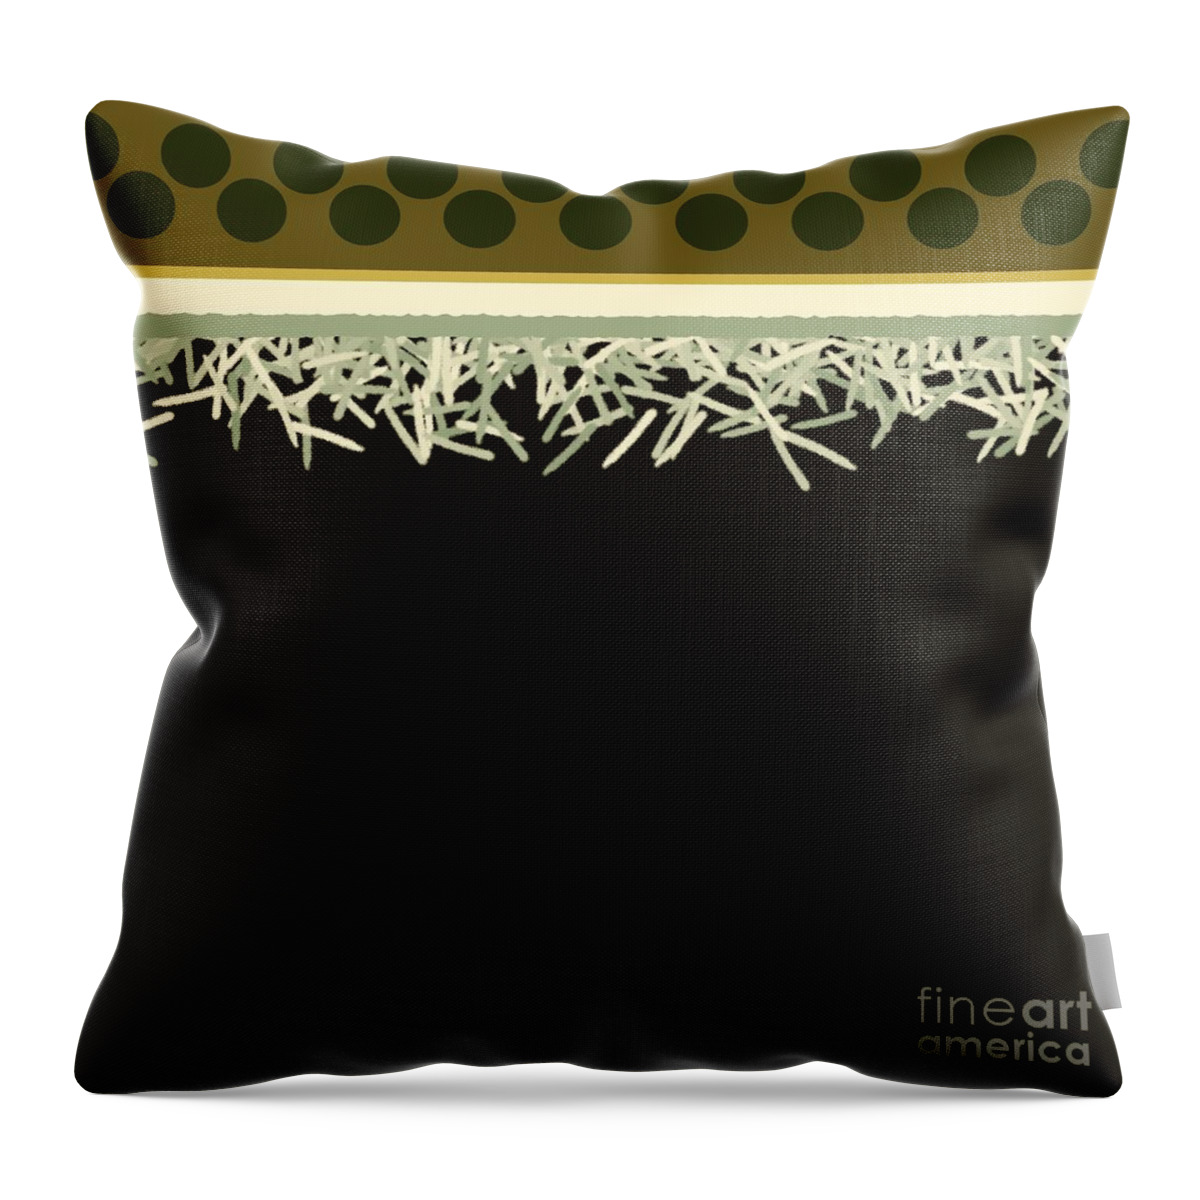 Black Throw Pillow featuring the digital art Black Tan Abstract Motif by Delynn Addams